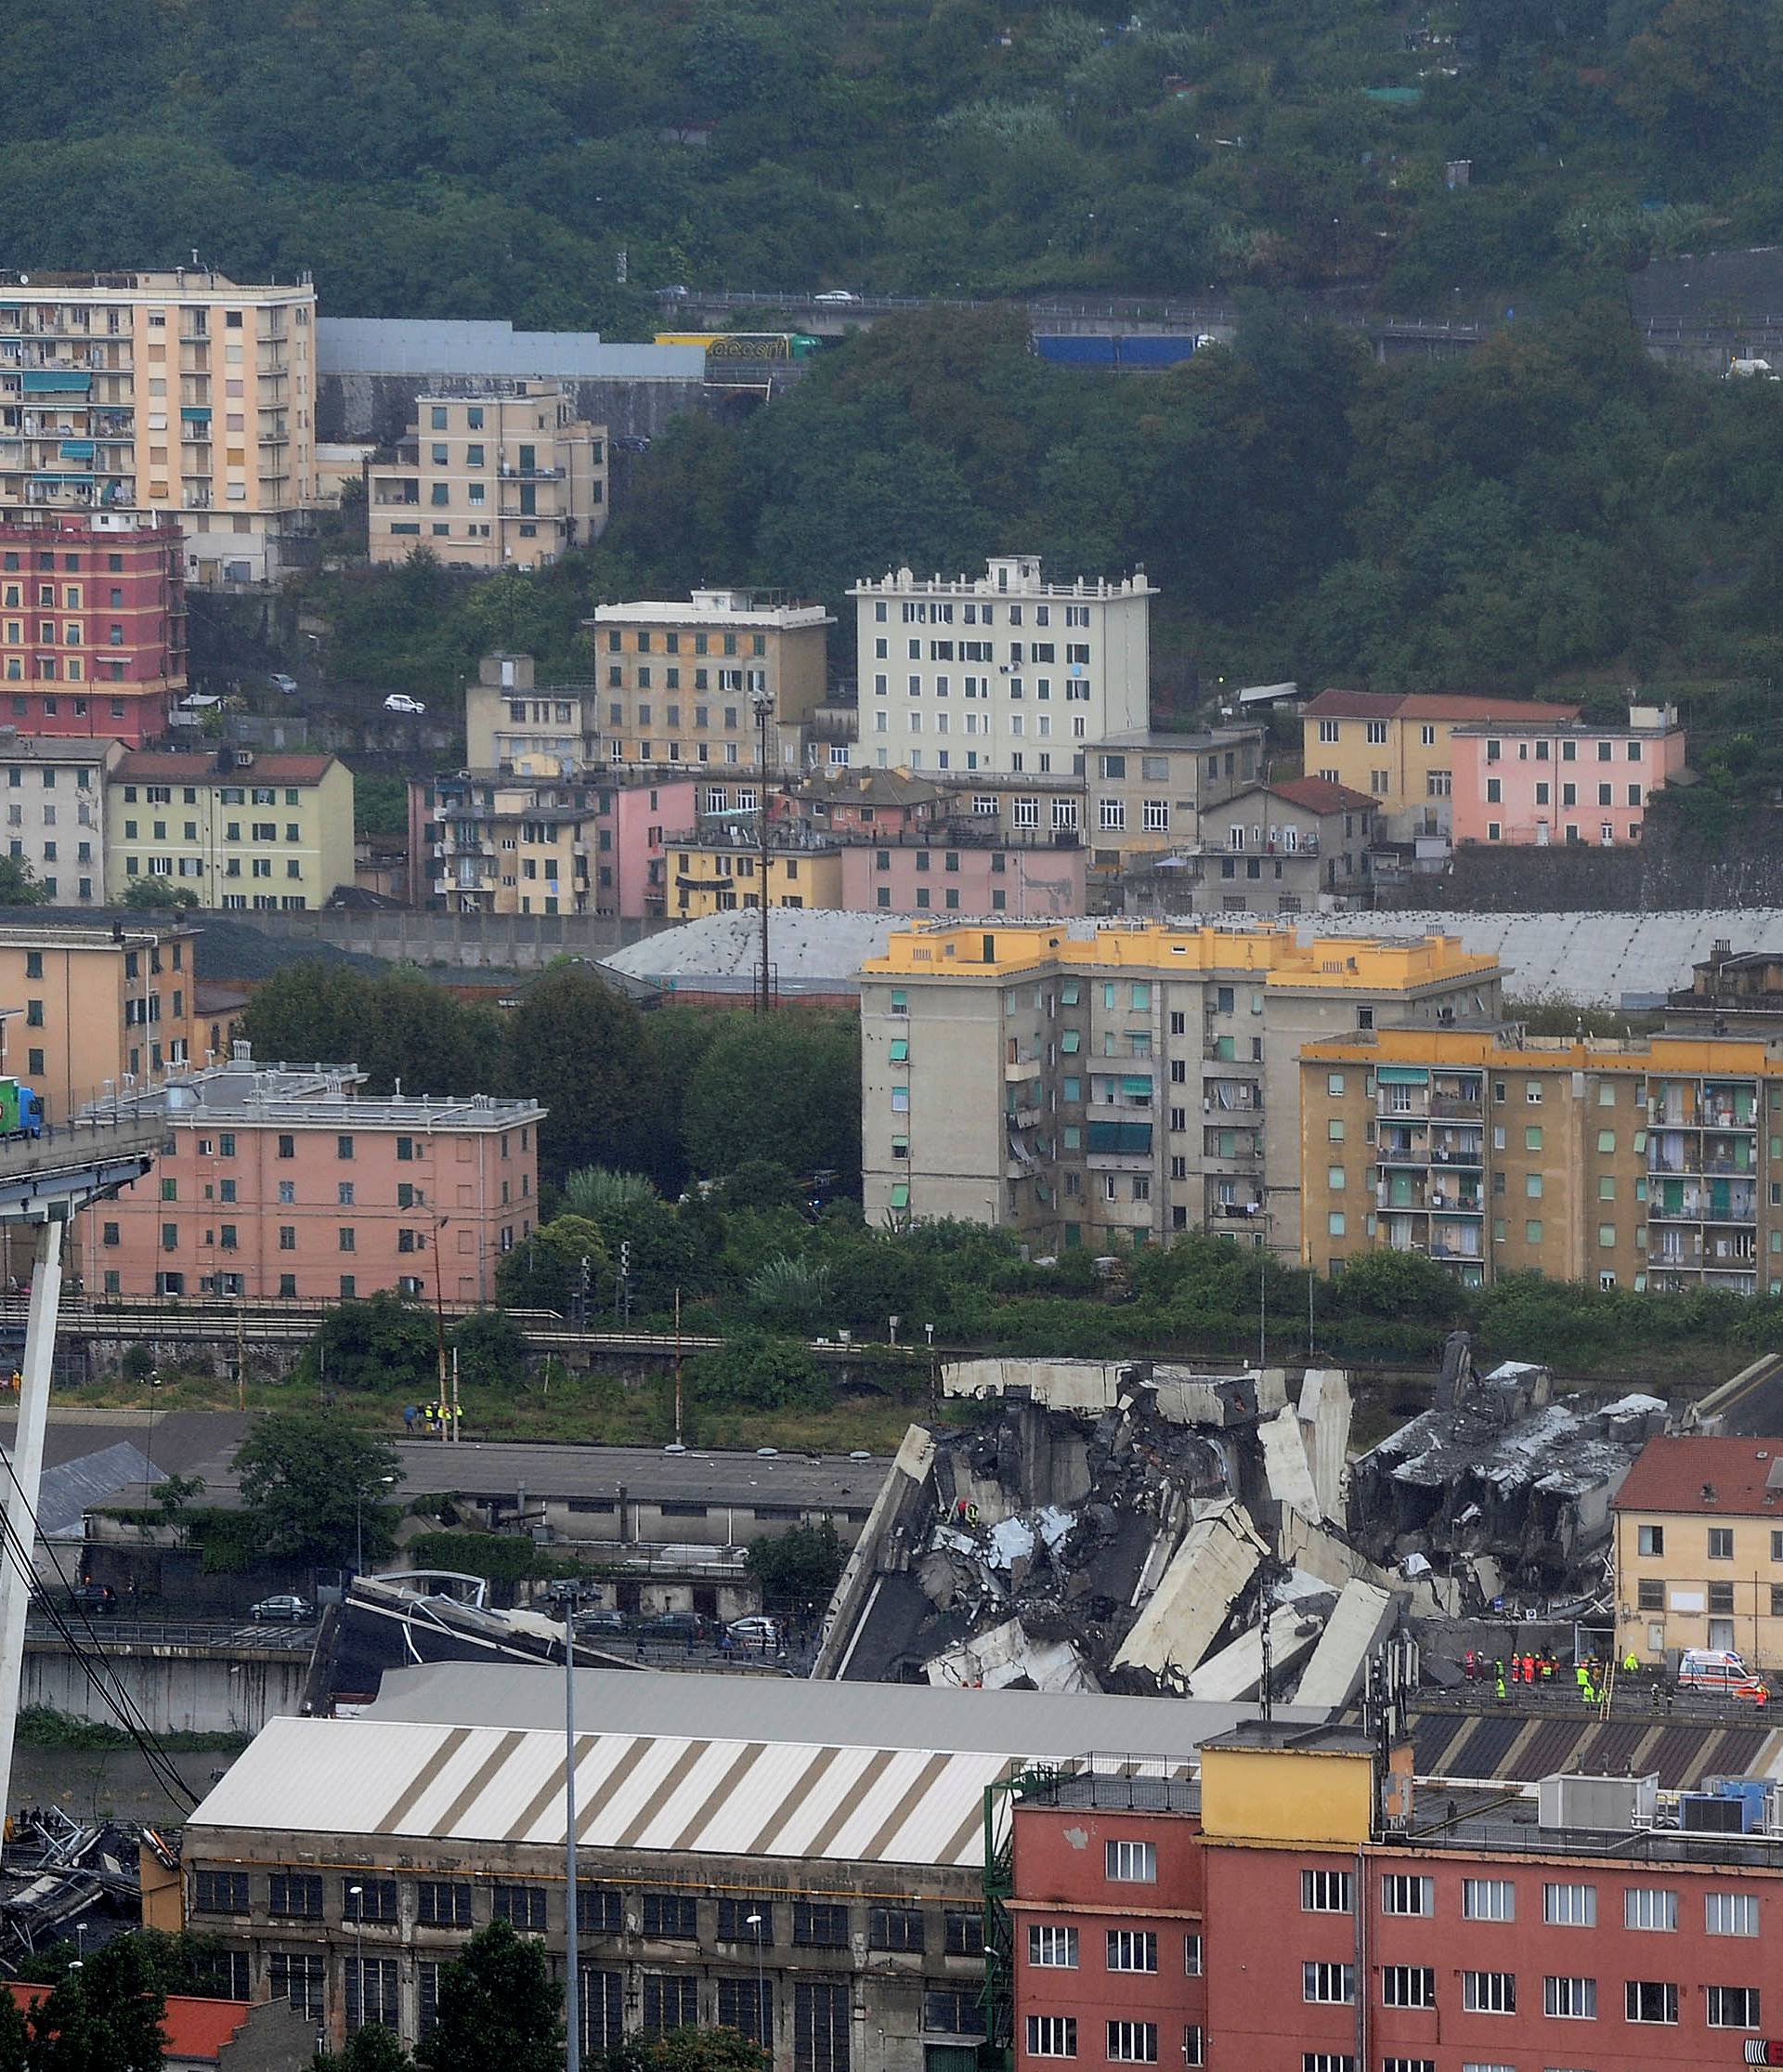 The collapsed Morandi Bridge is seen in the Italian port city of Genoa